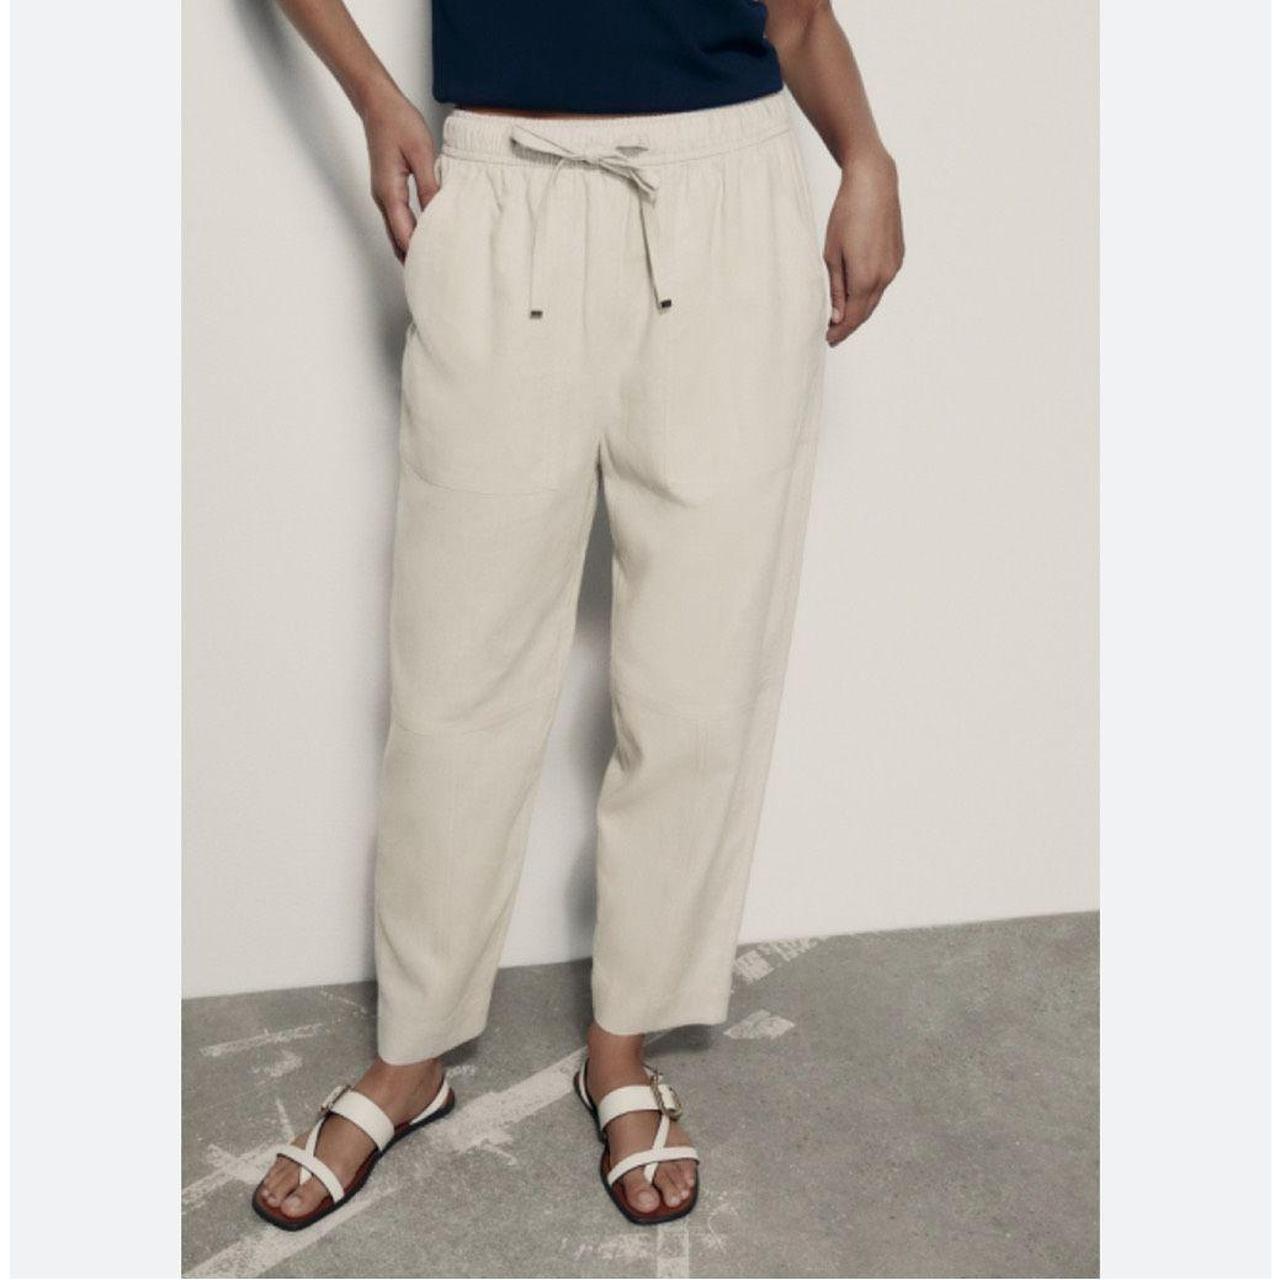 Zara - Zara White Trousers on Designer Wardrobe